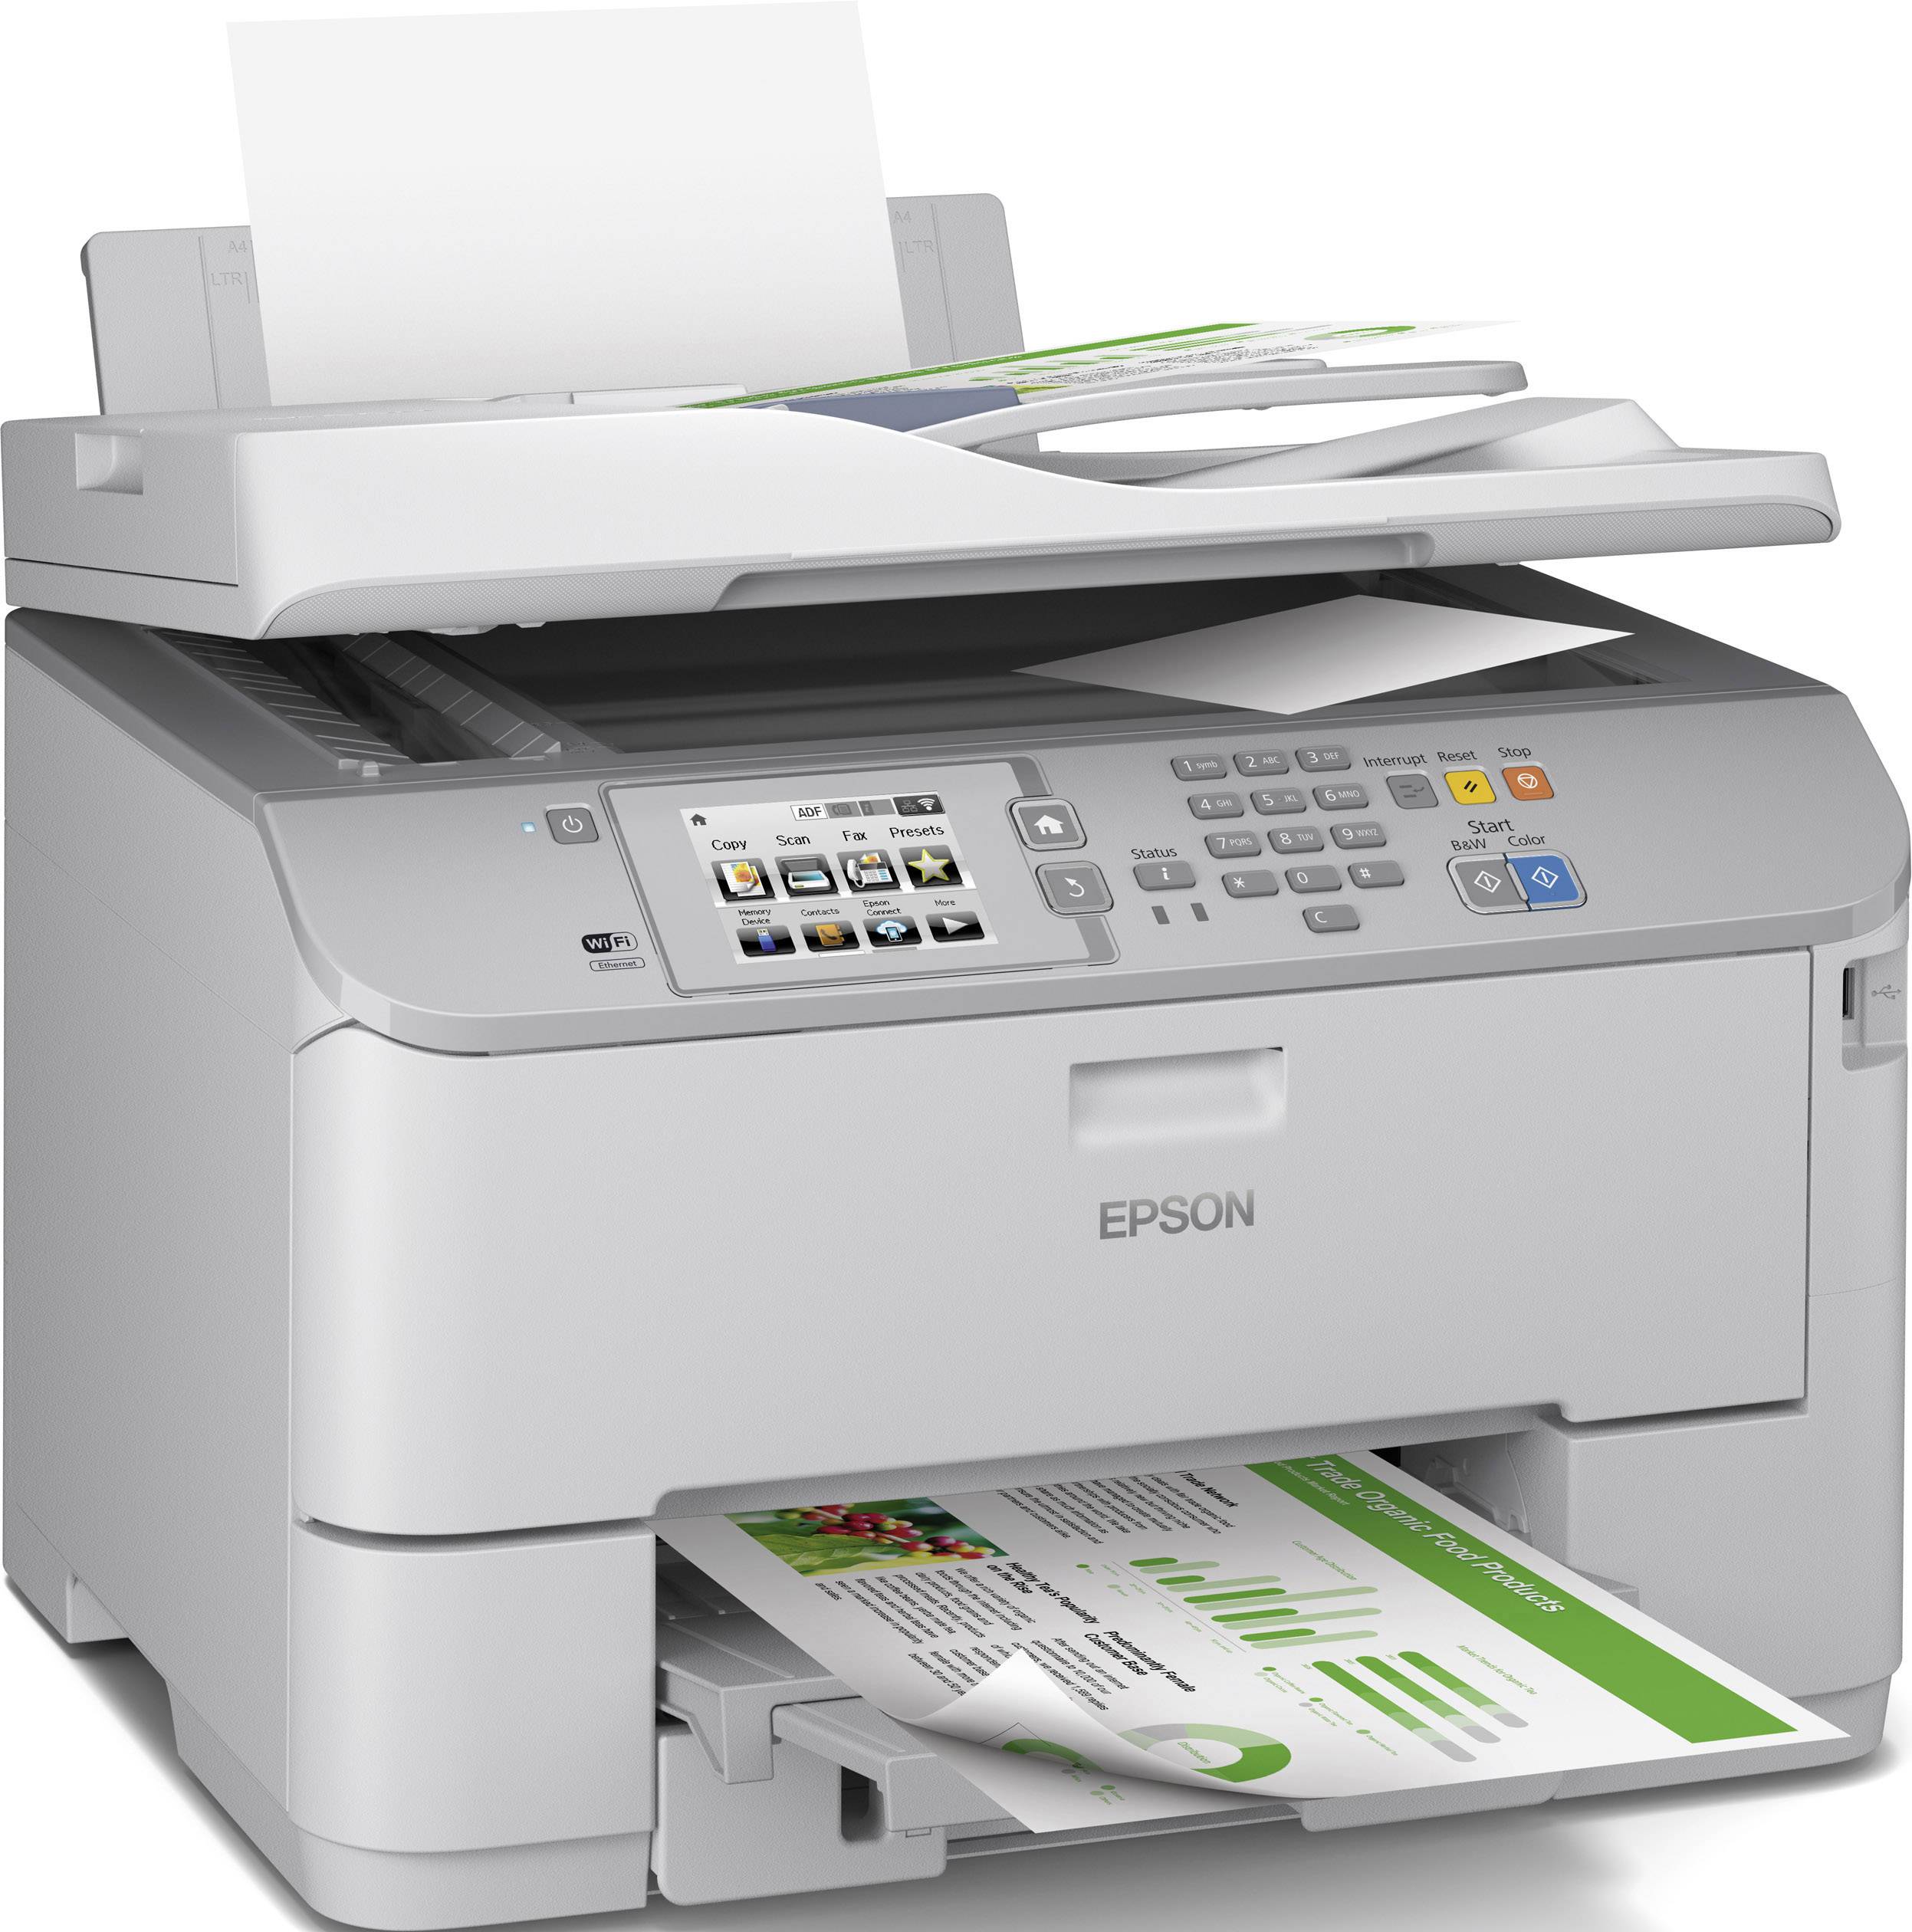 Epson Workforce Pro Wf 5620dwf Colour Inkjet Multifunction Printer A4 Printer Scanner Copier 2349